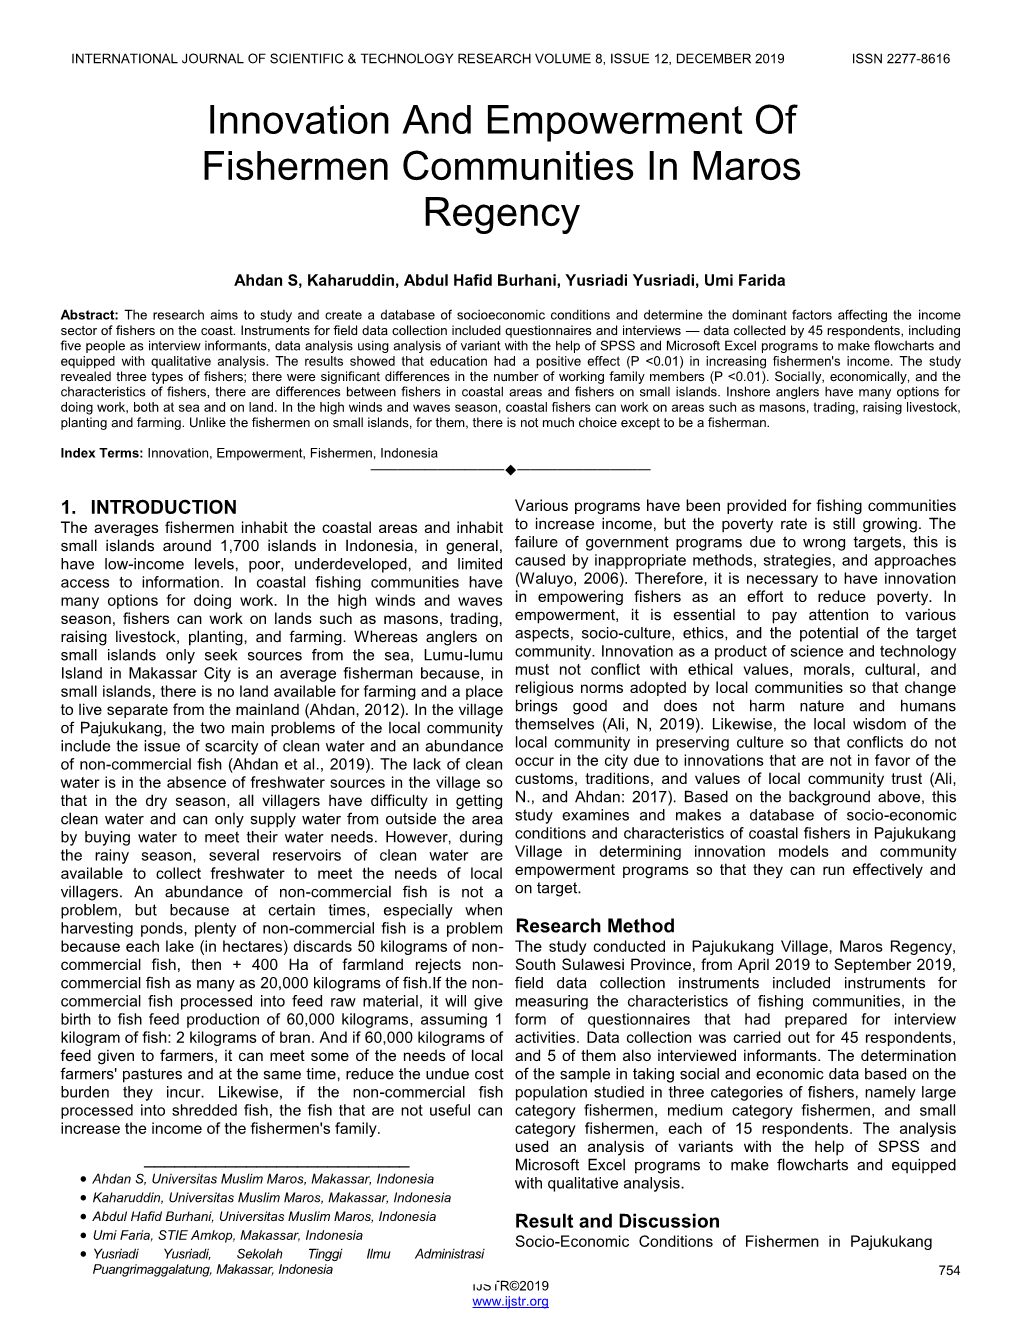 Innovation and Empowerment of Fishermen Communities in Maros Regency